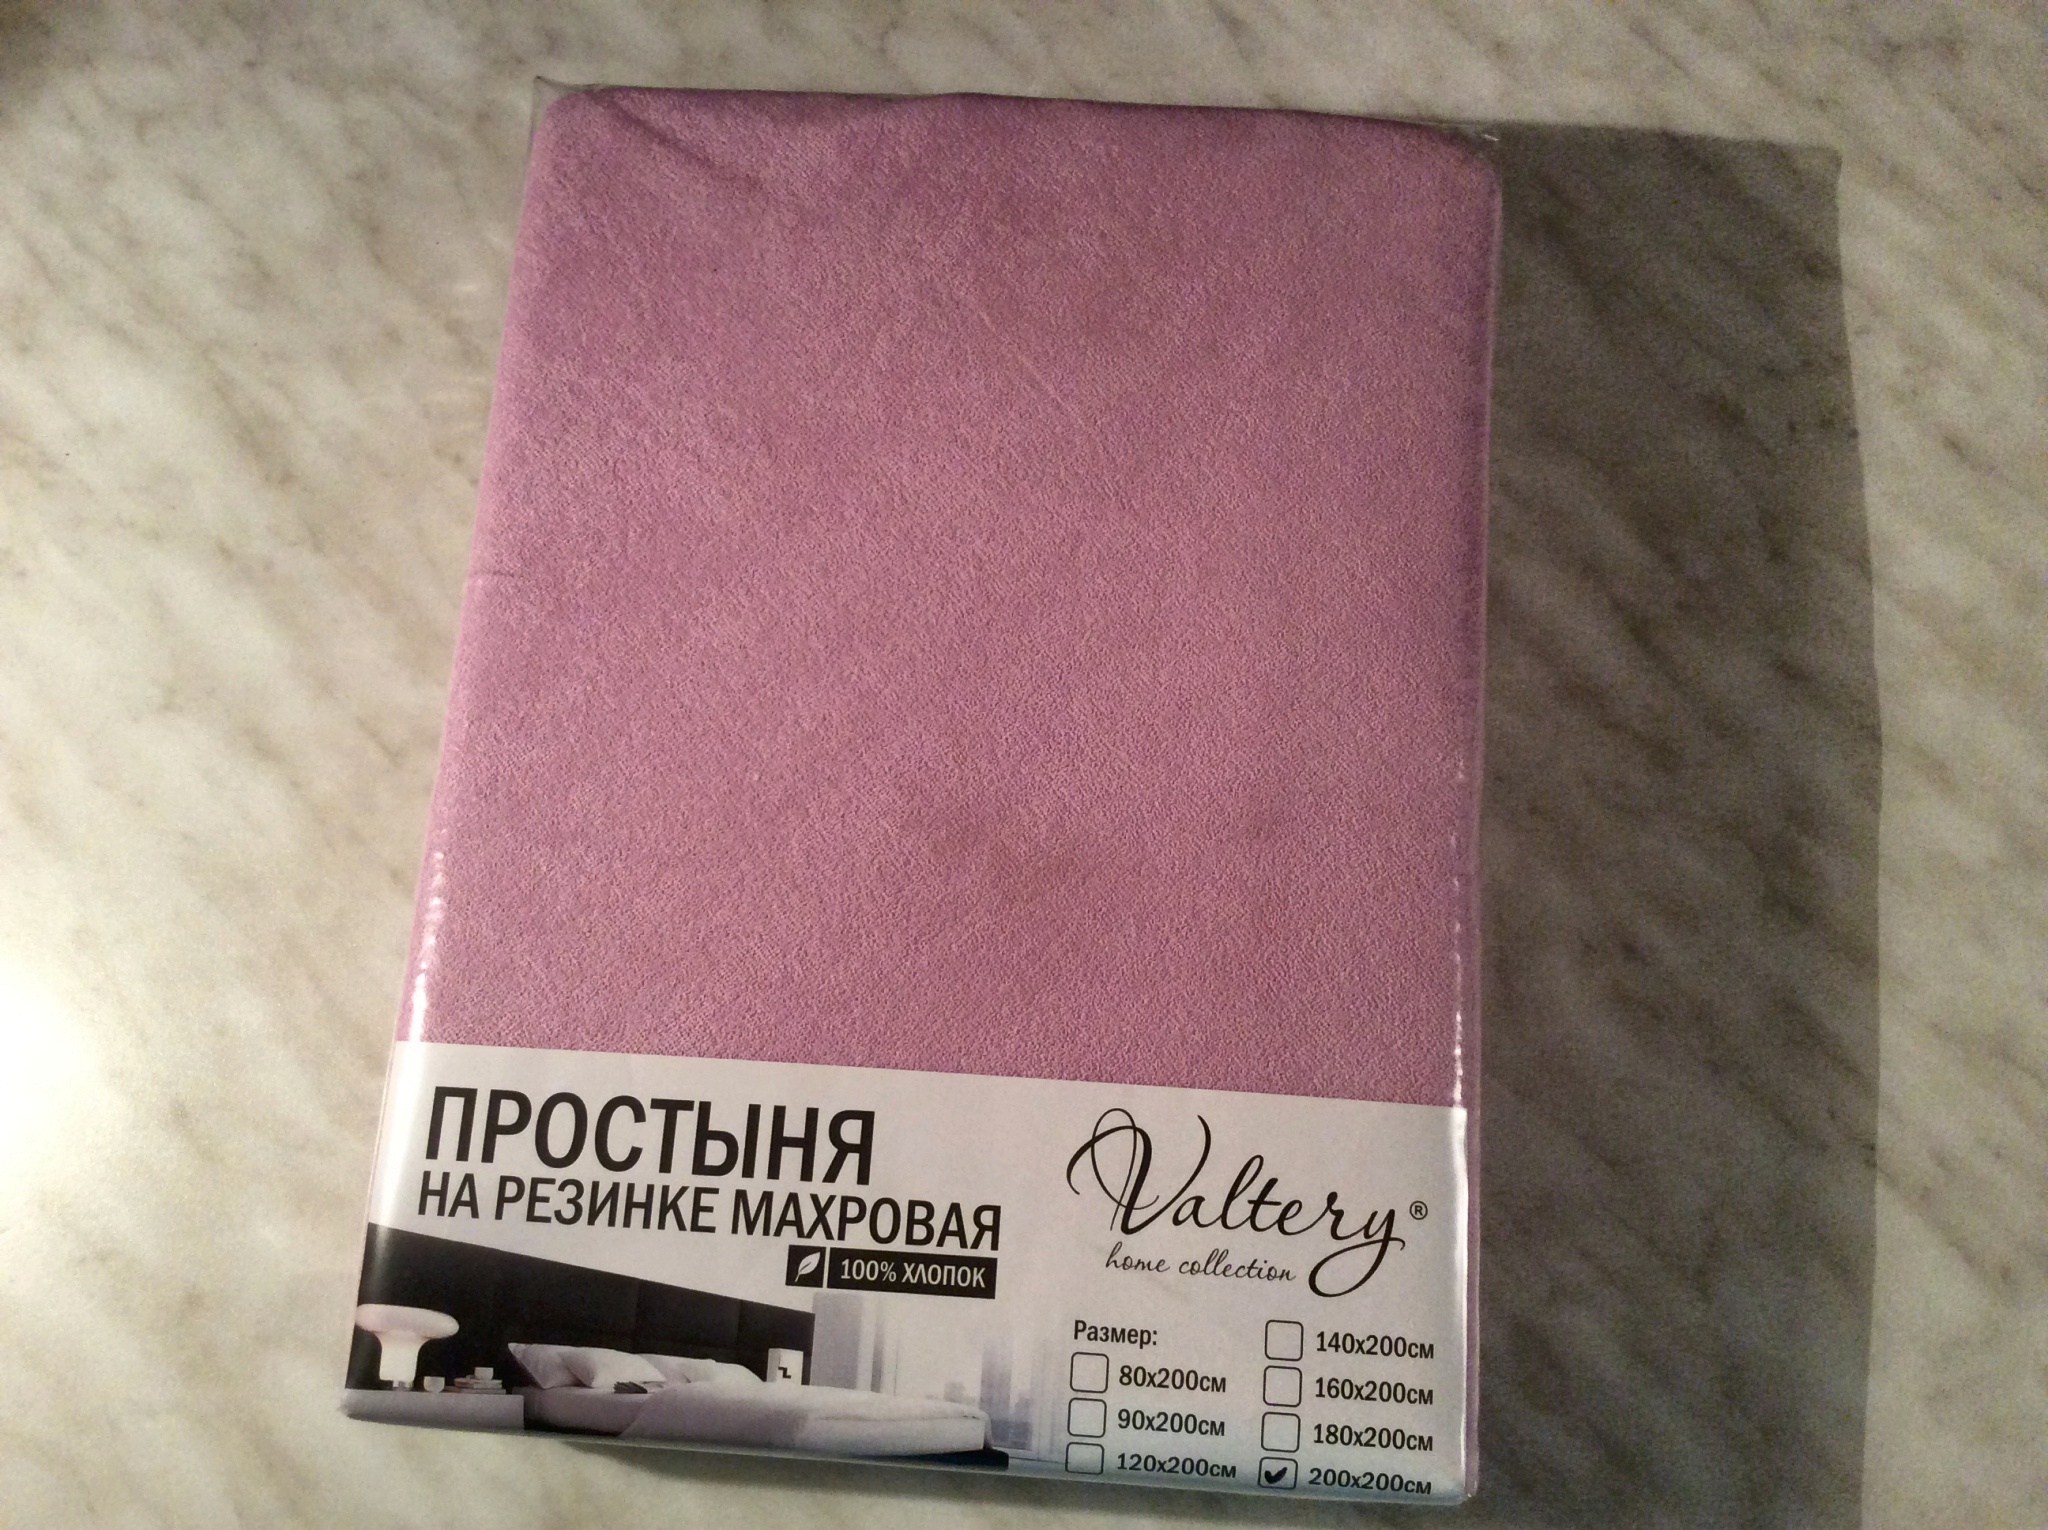 Простыня Valtery PM fioletovaya цвет фиолетовый размер 200x200